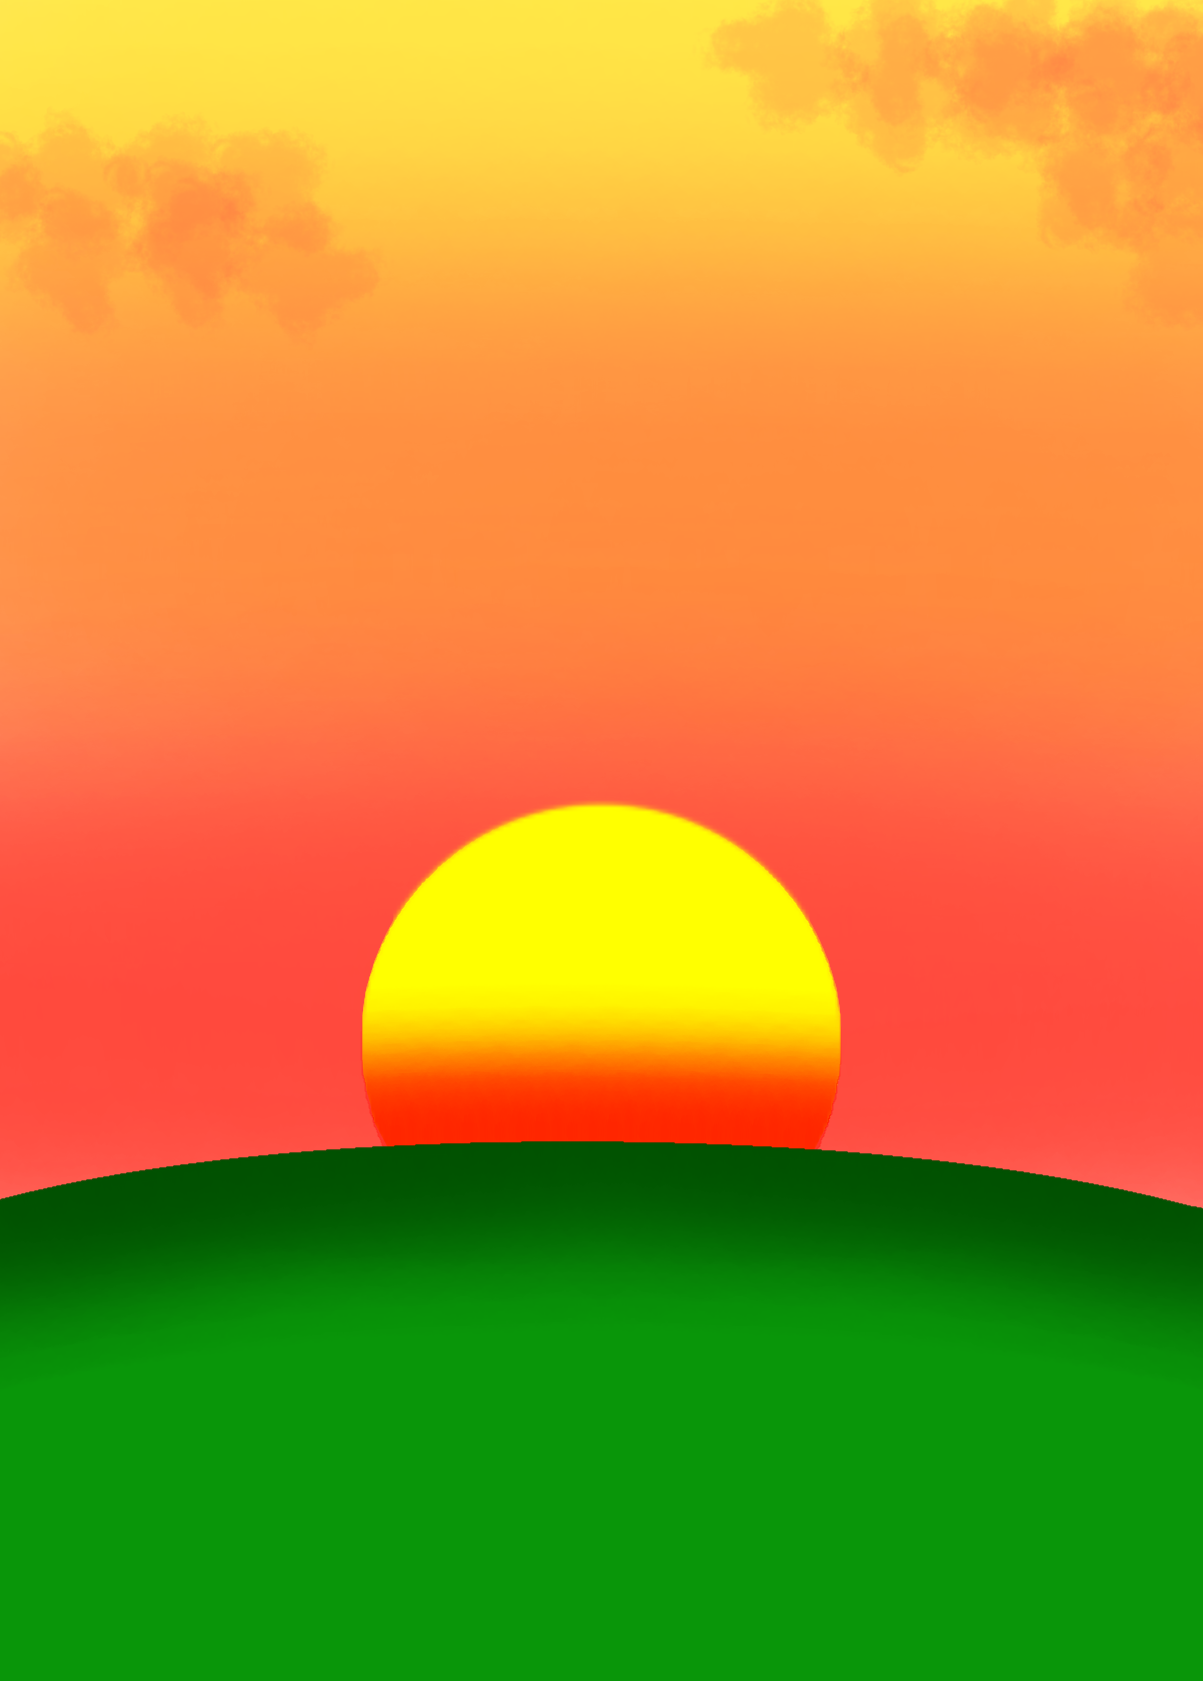 Simple sunset background by Rabita2 on DeviantArt